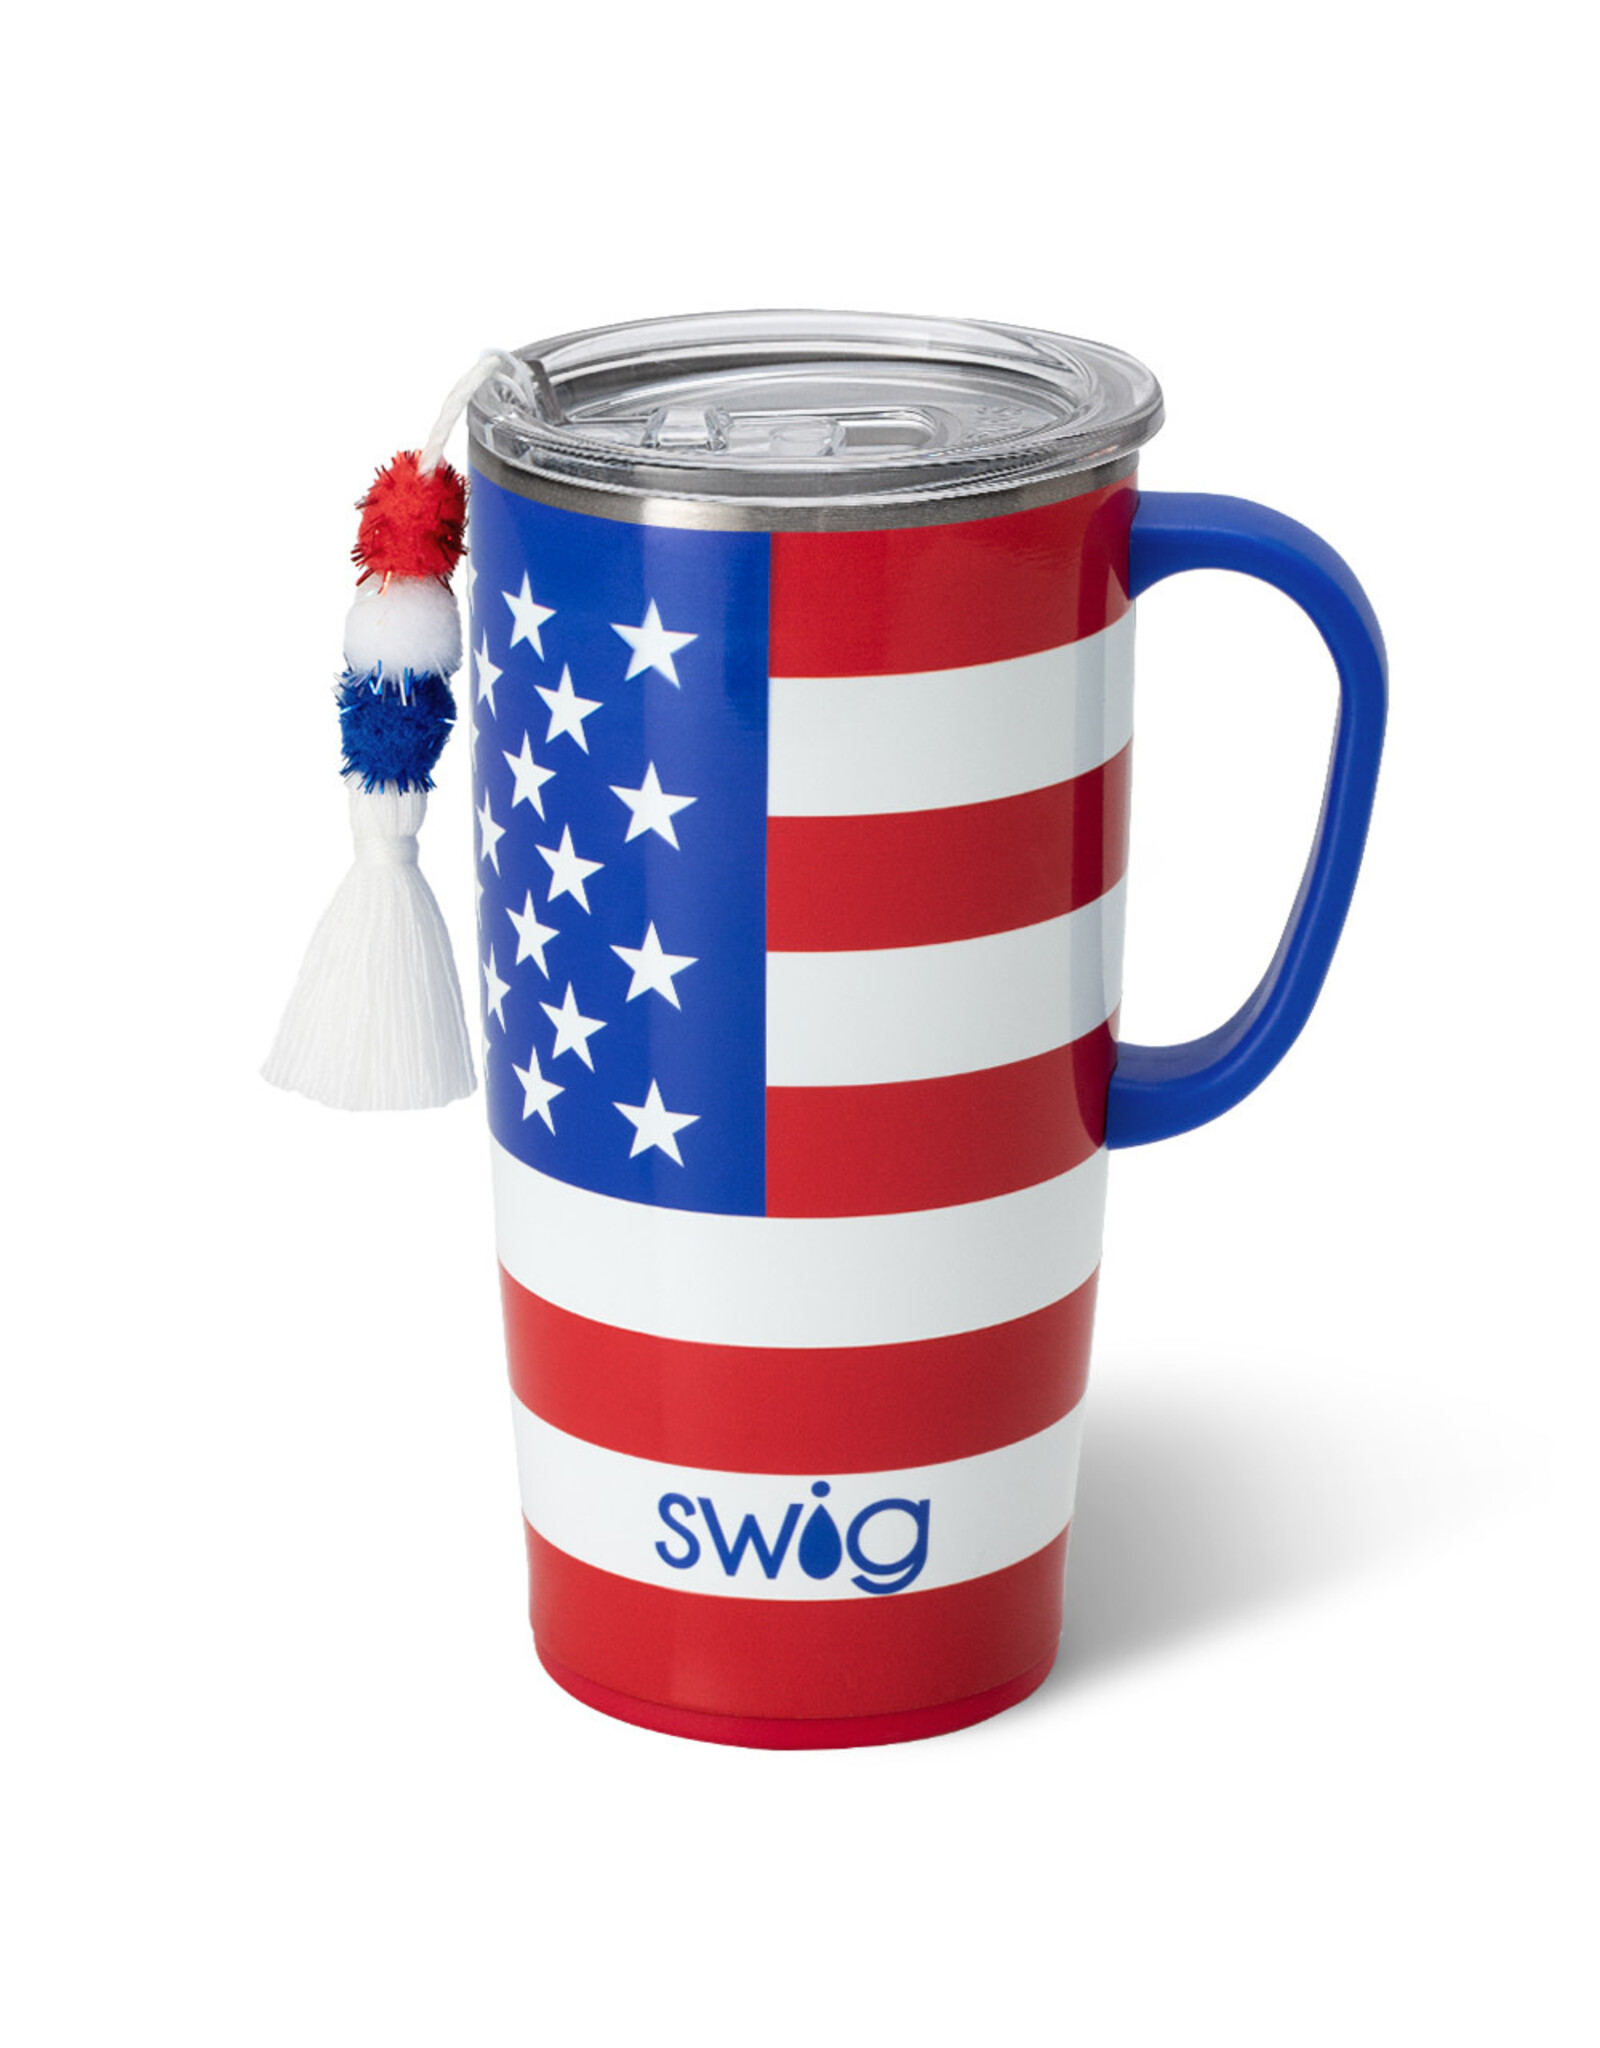 All American 22 oz travel mug